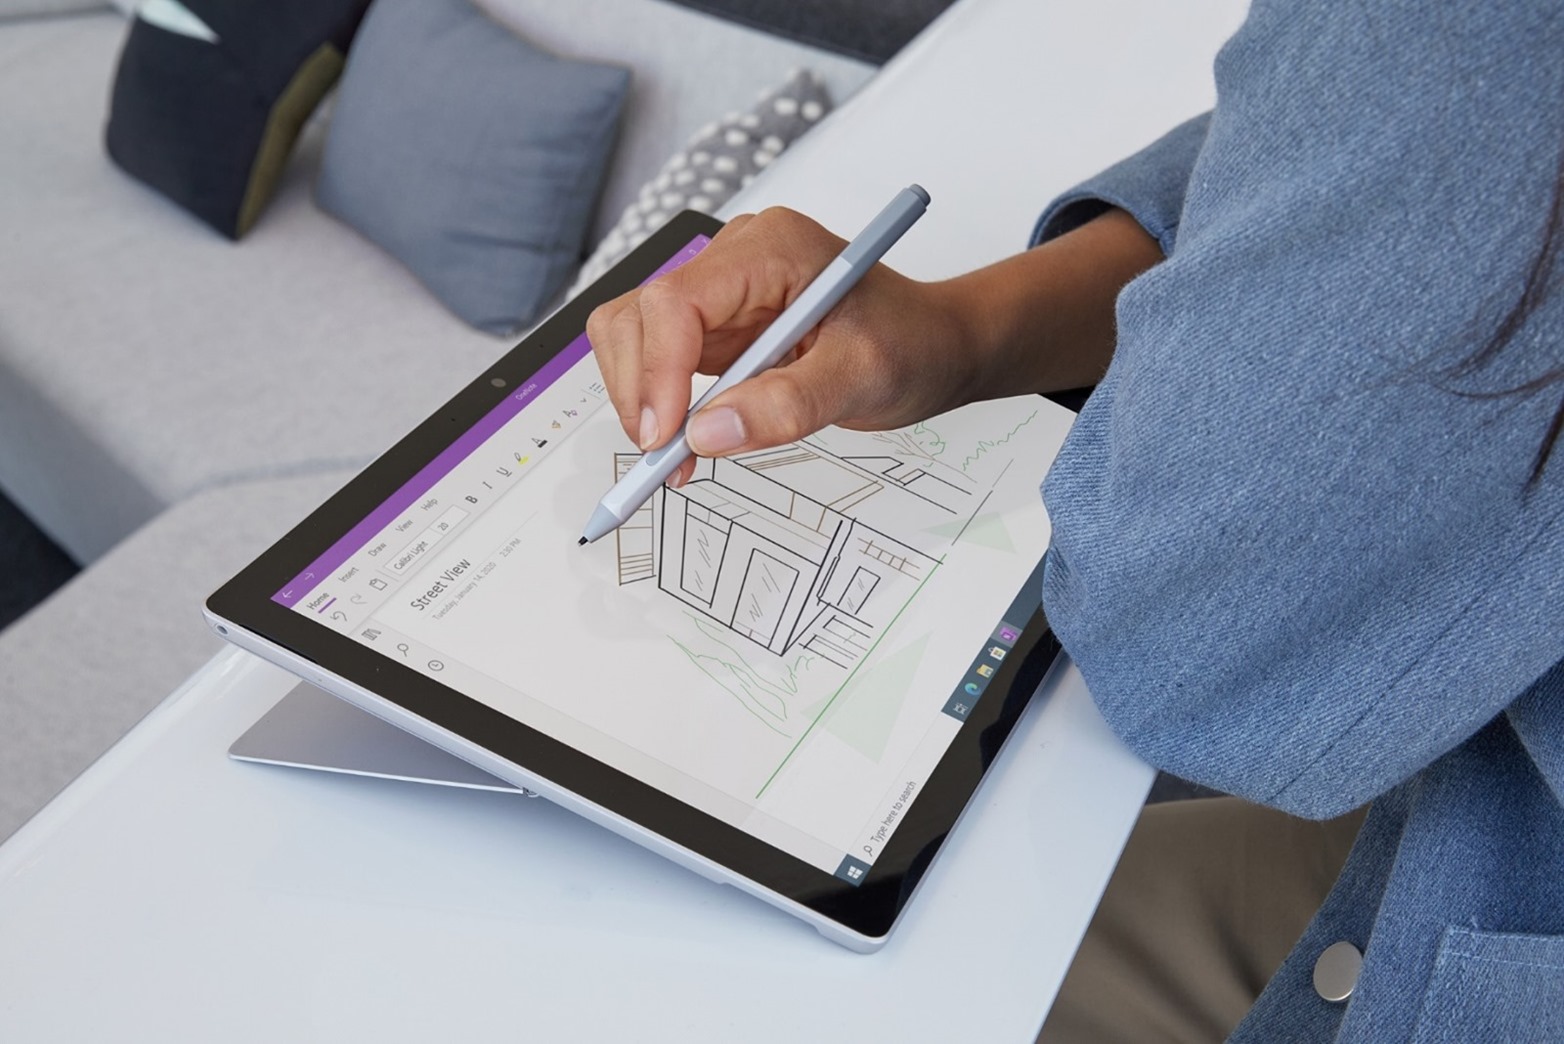 [CES 2021] 微軟發表全新 Surface Pro 7+ 商務版二合一筆電 混合辦公時代新賦能 企業與教育客戶擁有高效能、連線性和安全性 @3C 達人廖阿輝